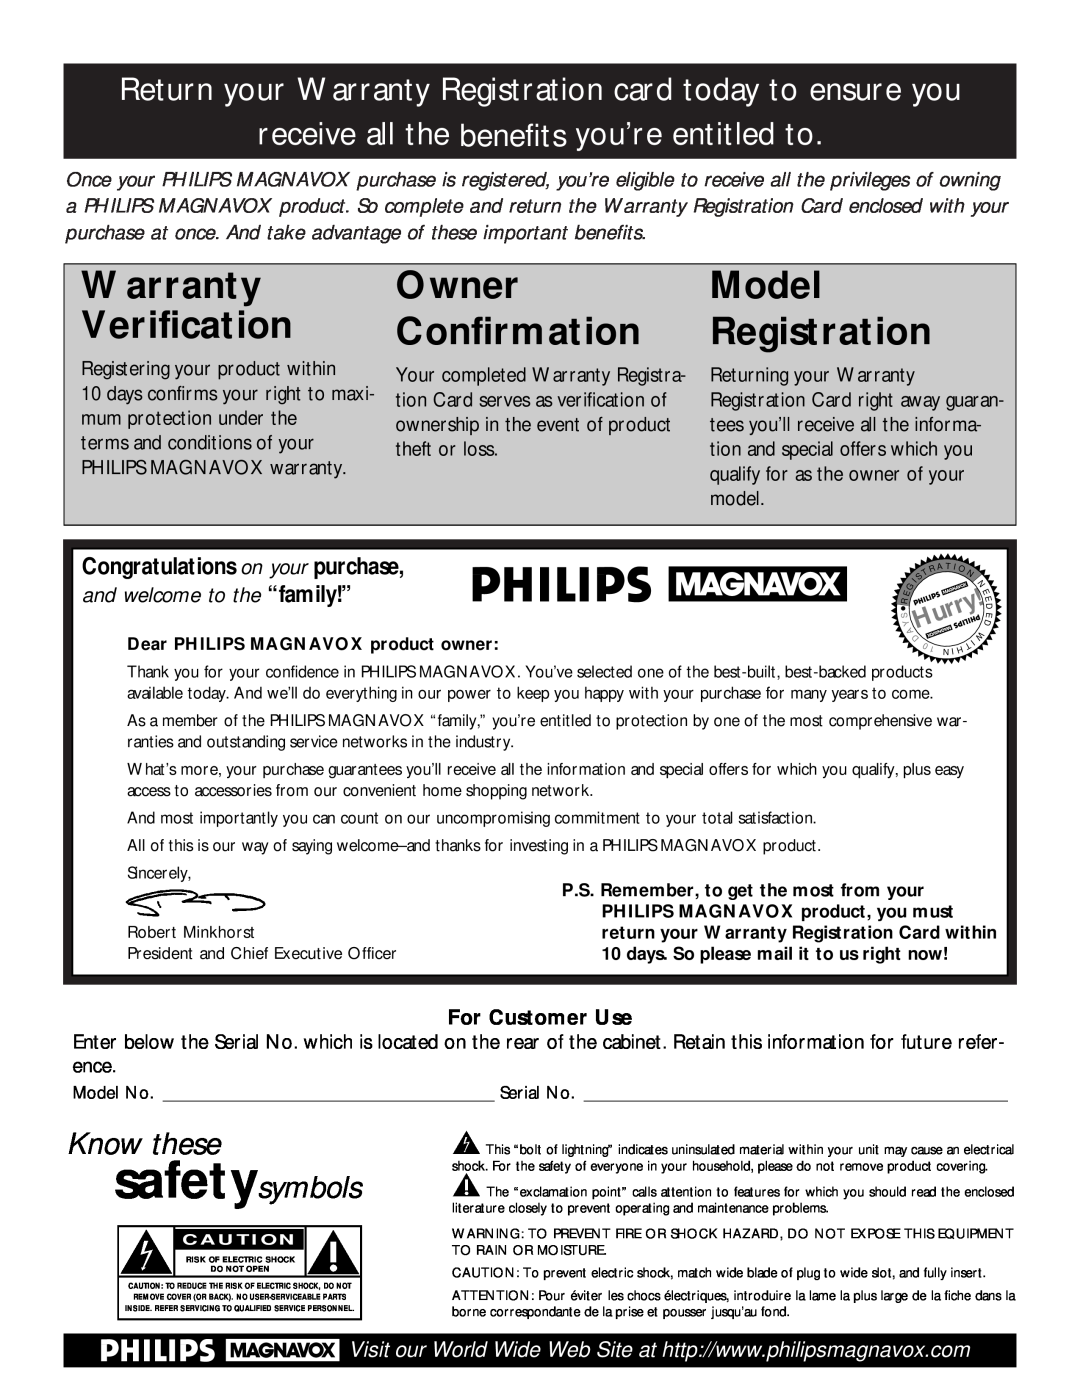 Philips MAT972KB QUG owner manual For Customer Use, Warranty Verification, Owner Confirmation, Model Registration, AHurry 